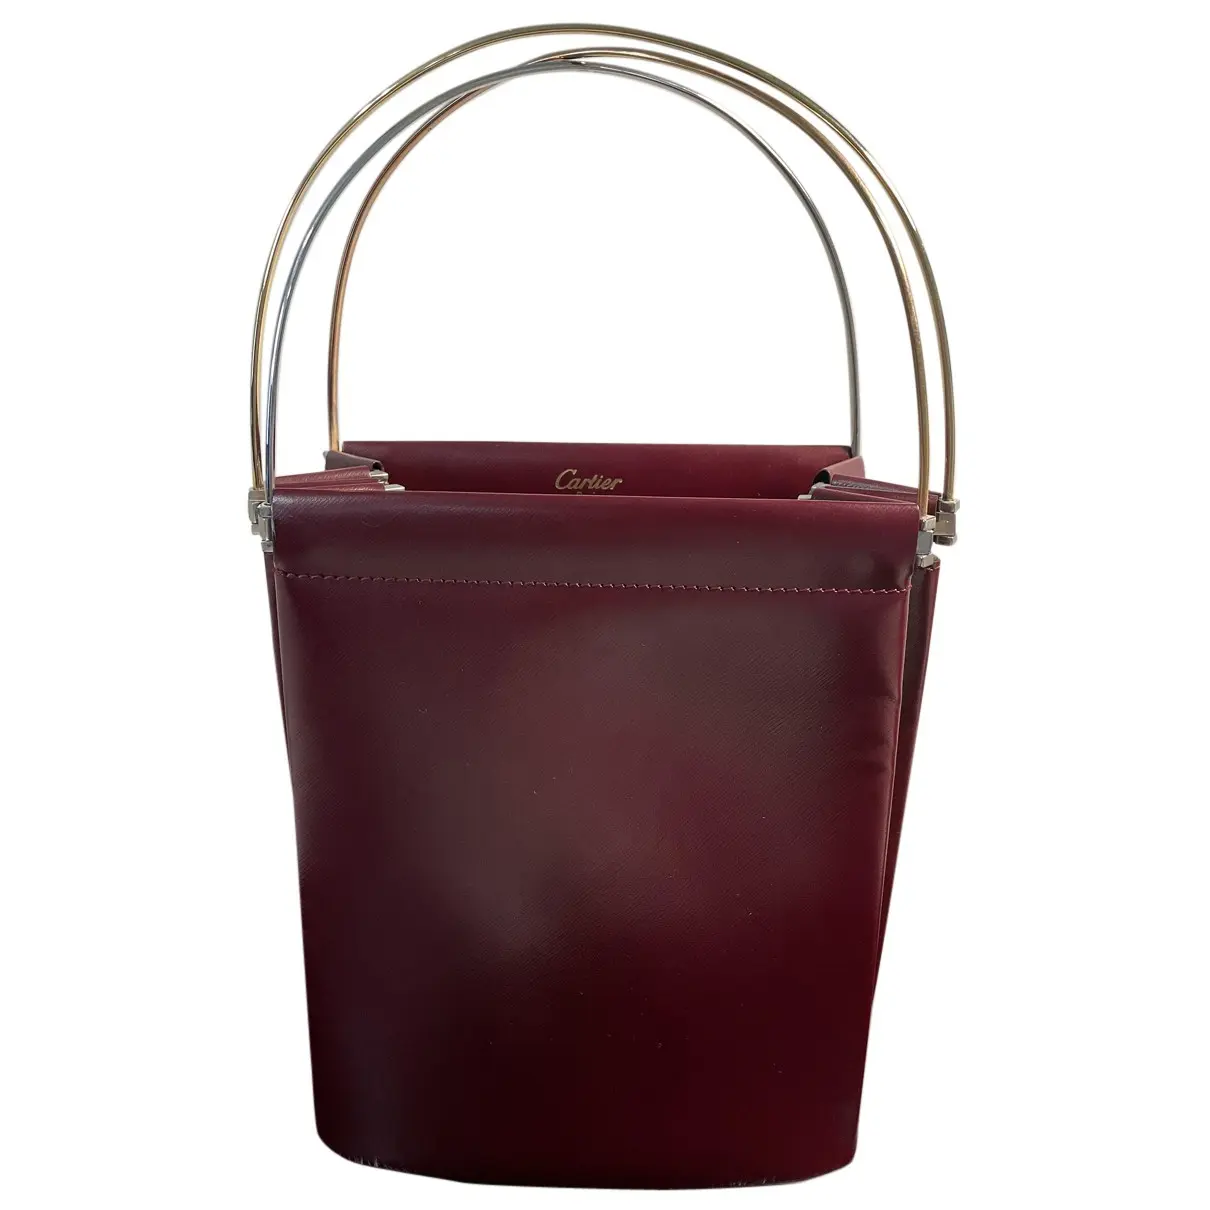 Trinity leather handbag Cartier